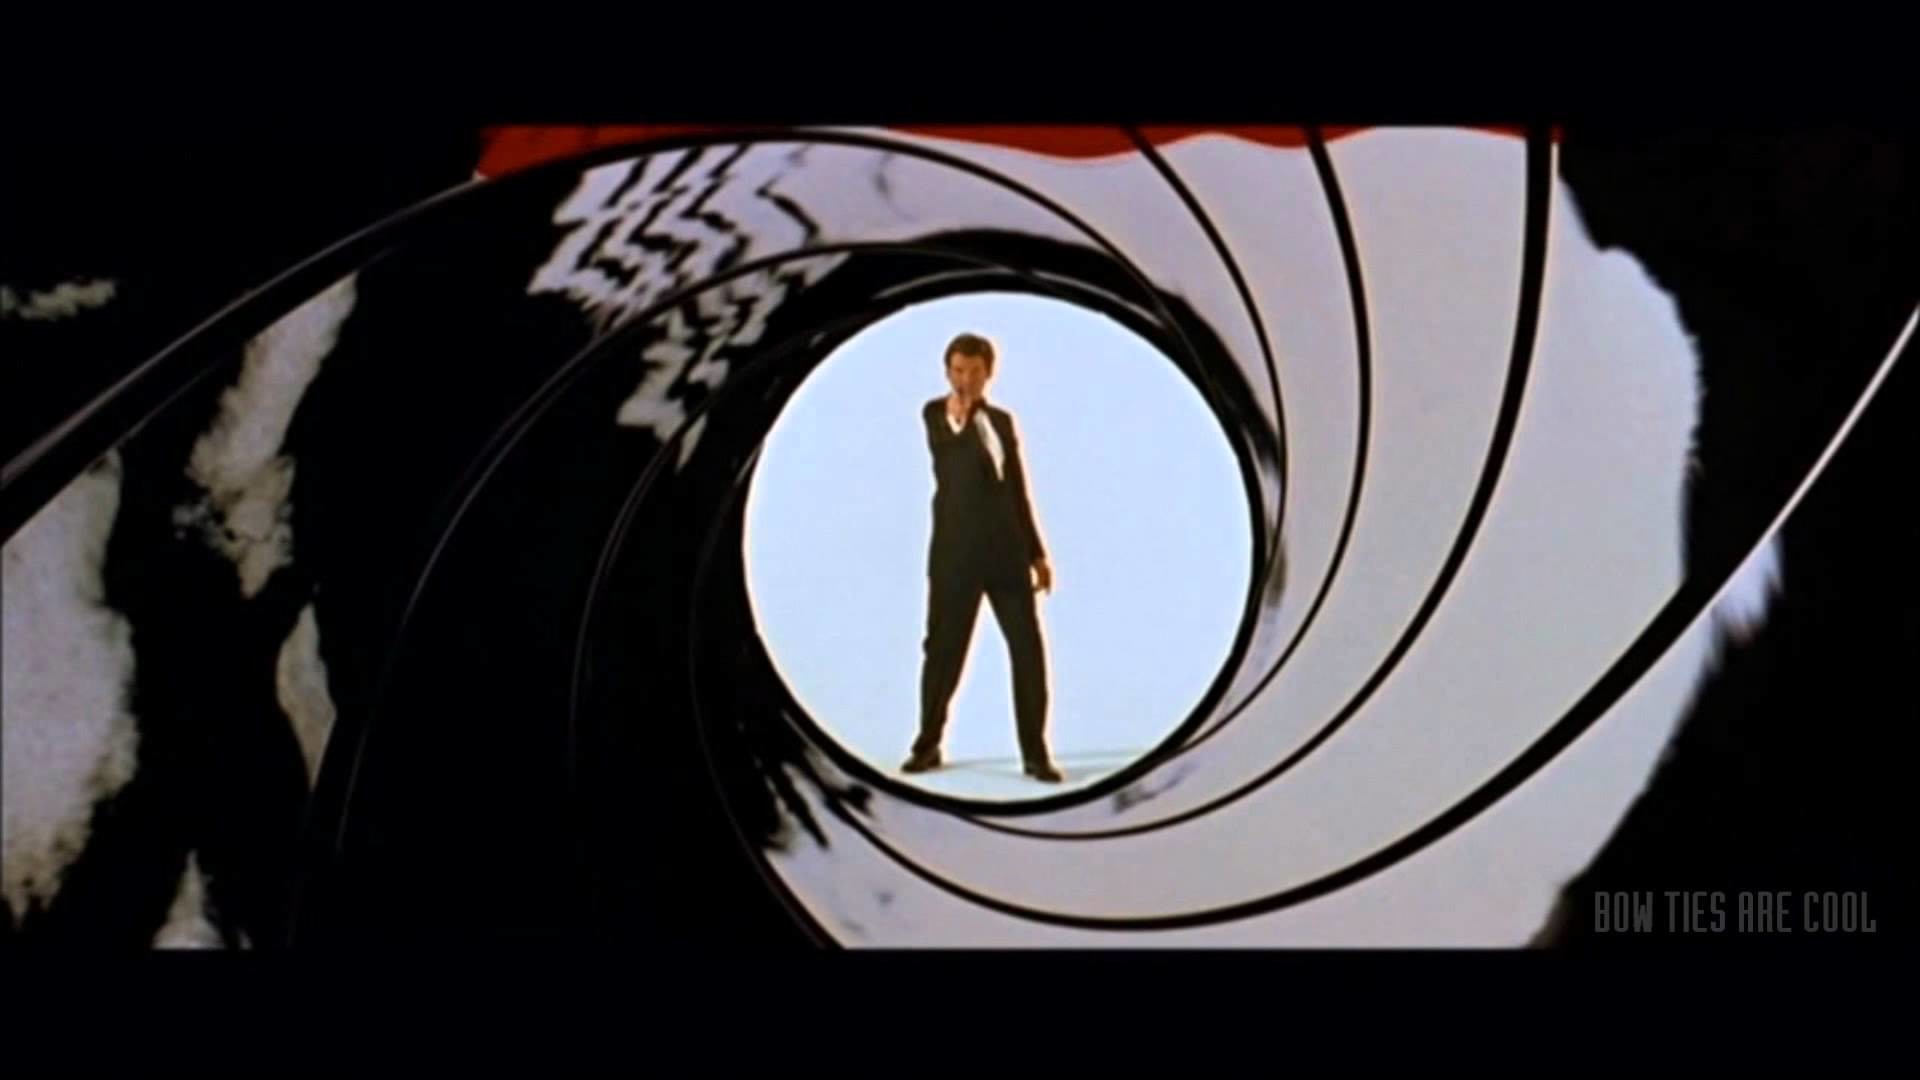 James Bond Gun Barrel Wallpaper Image